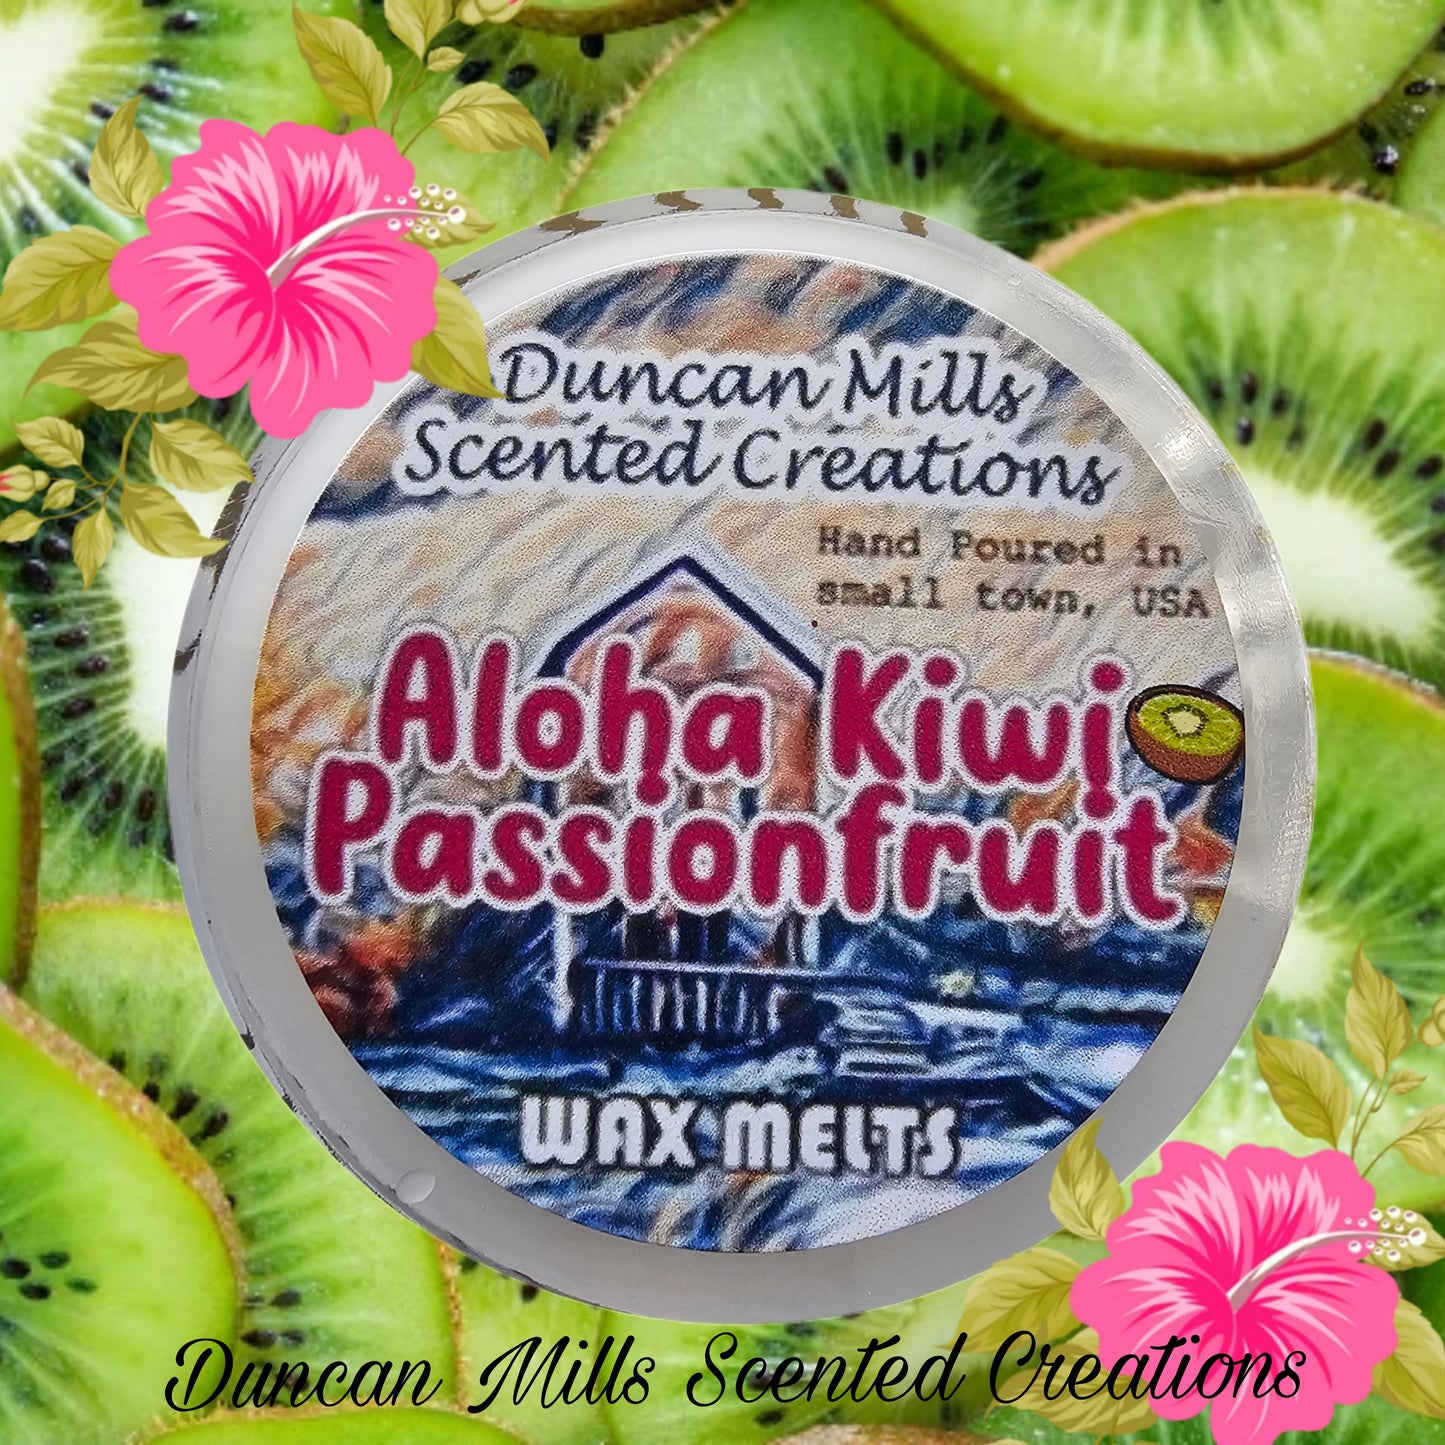 ALOHA KIWI PASSIONFRUIT wax melts